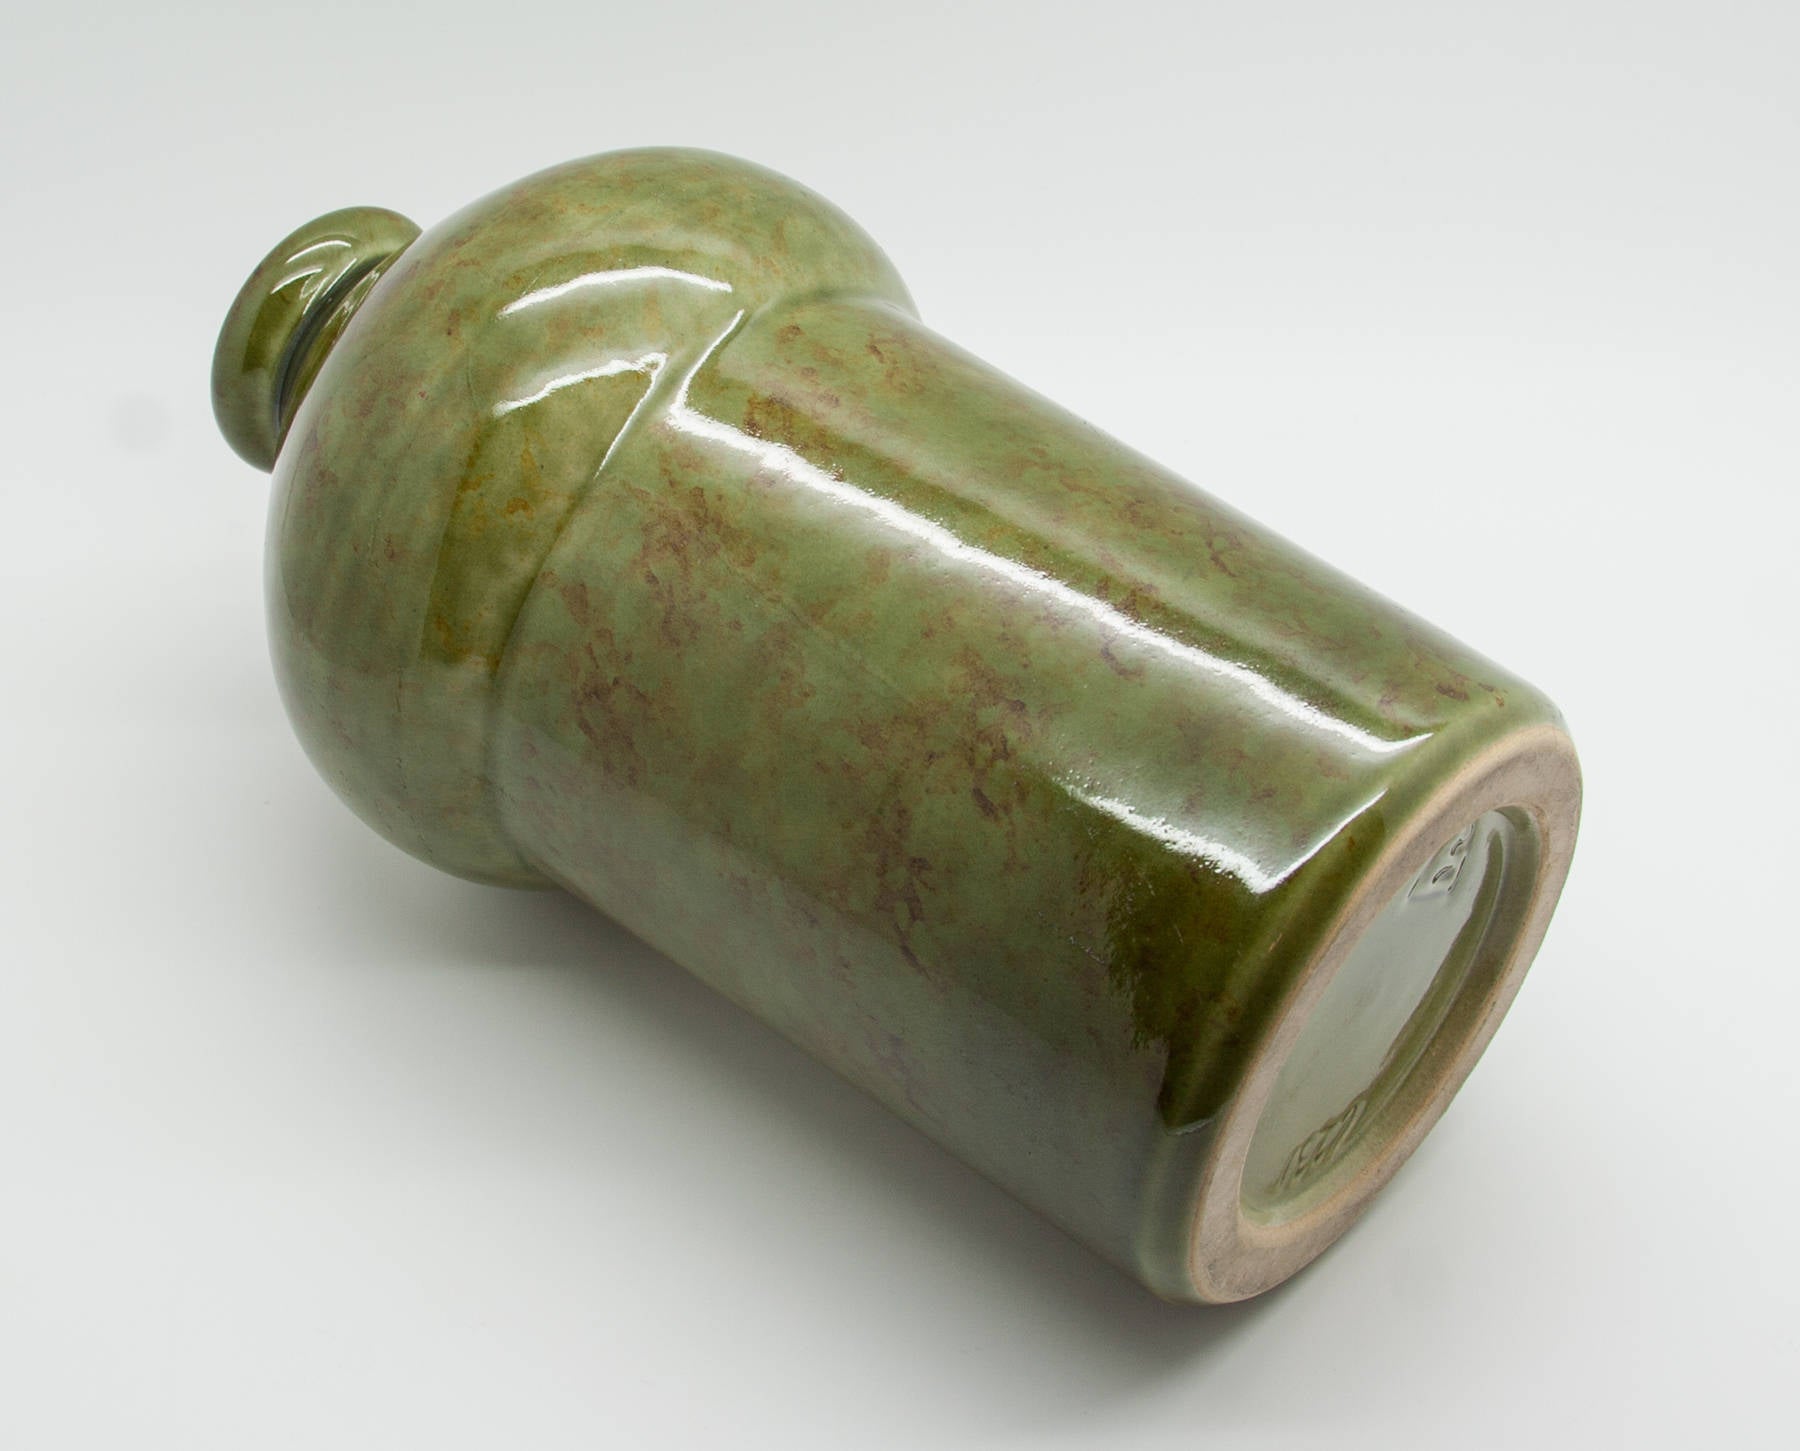 MARIANNE STARCK / MICHAEL ANDERSEN Green Glazed Stoneware Vase Mollaris.com 